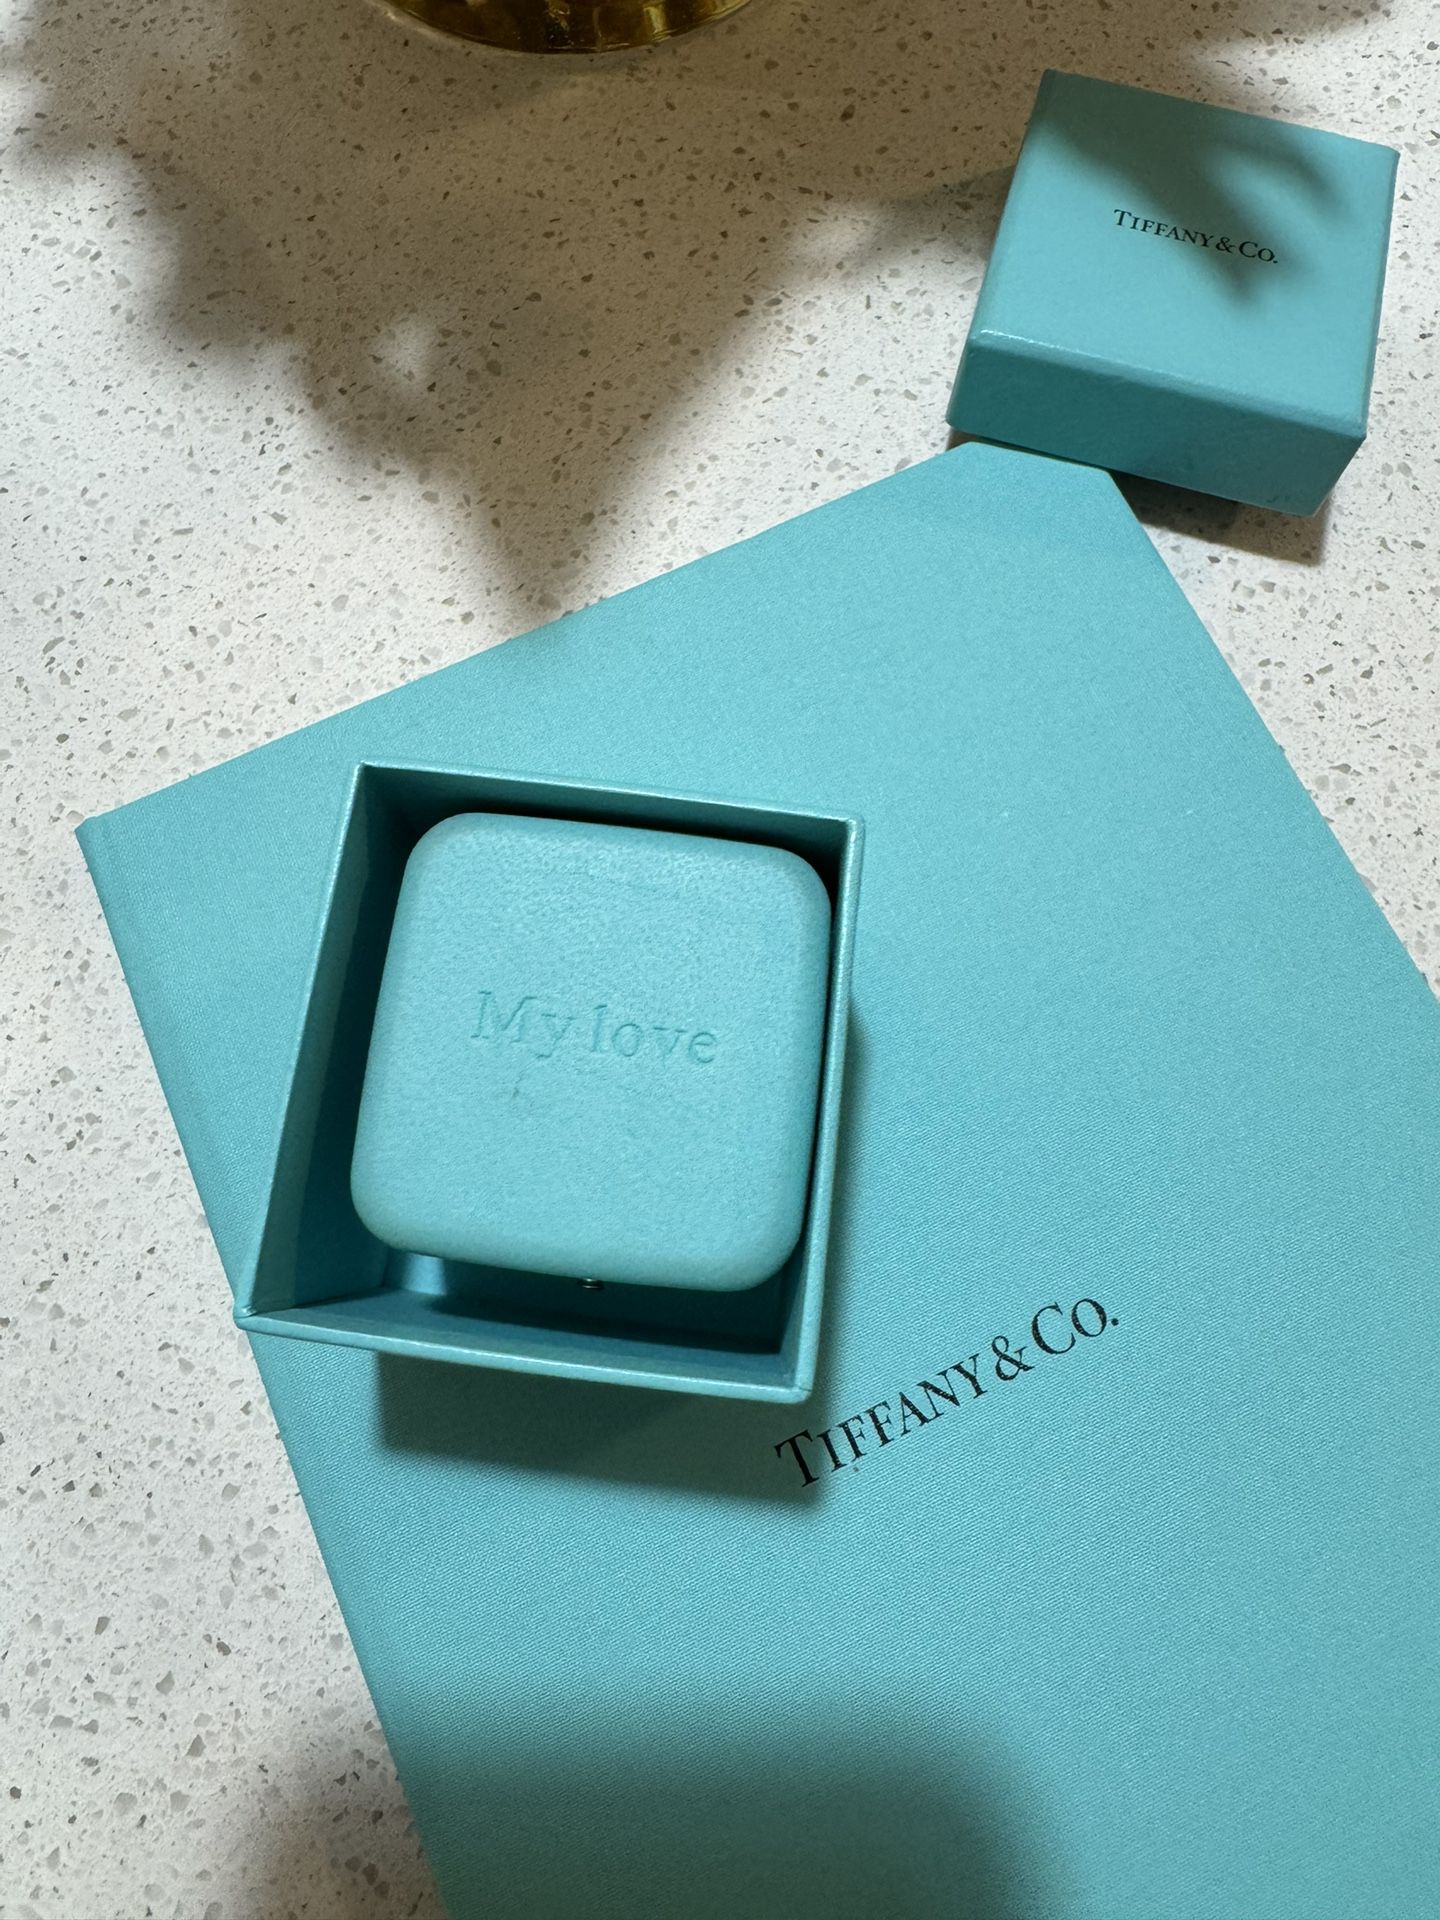 Tiffany’s Engagement Ring